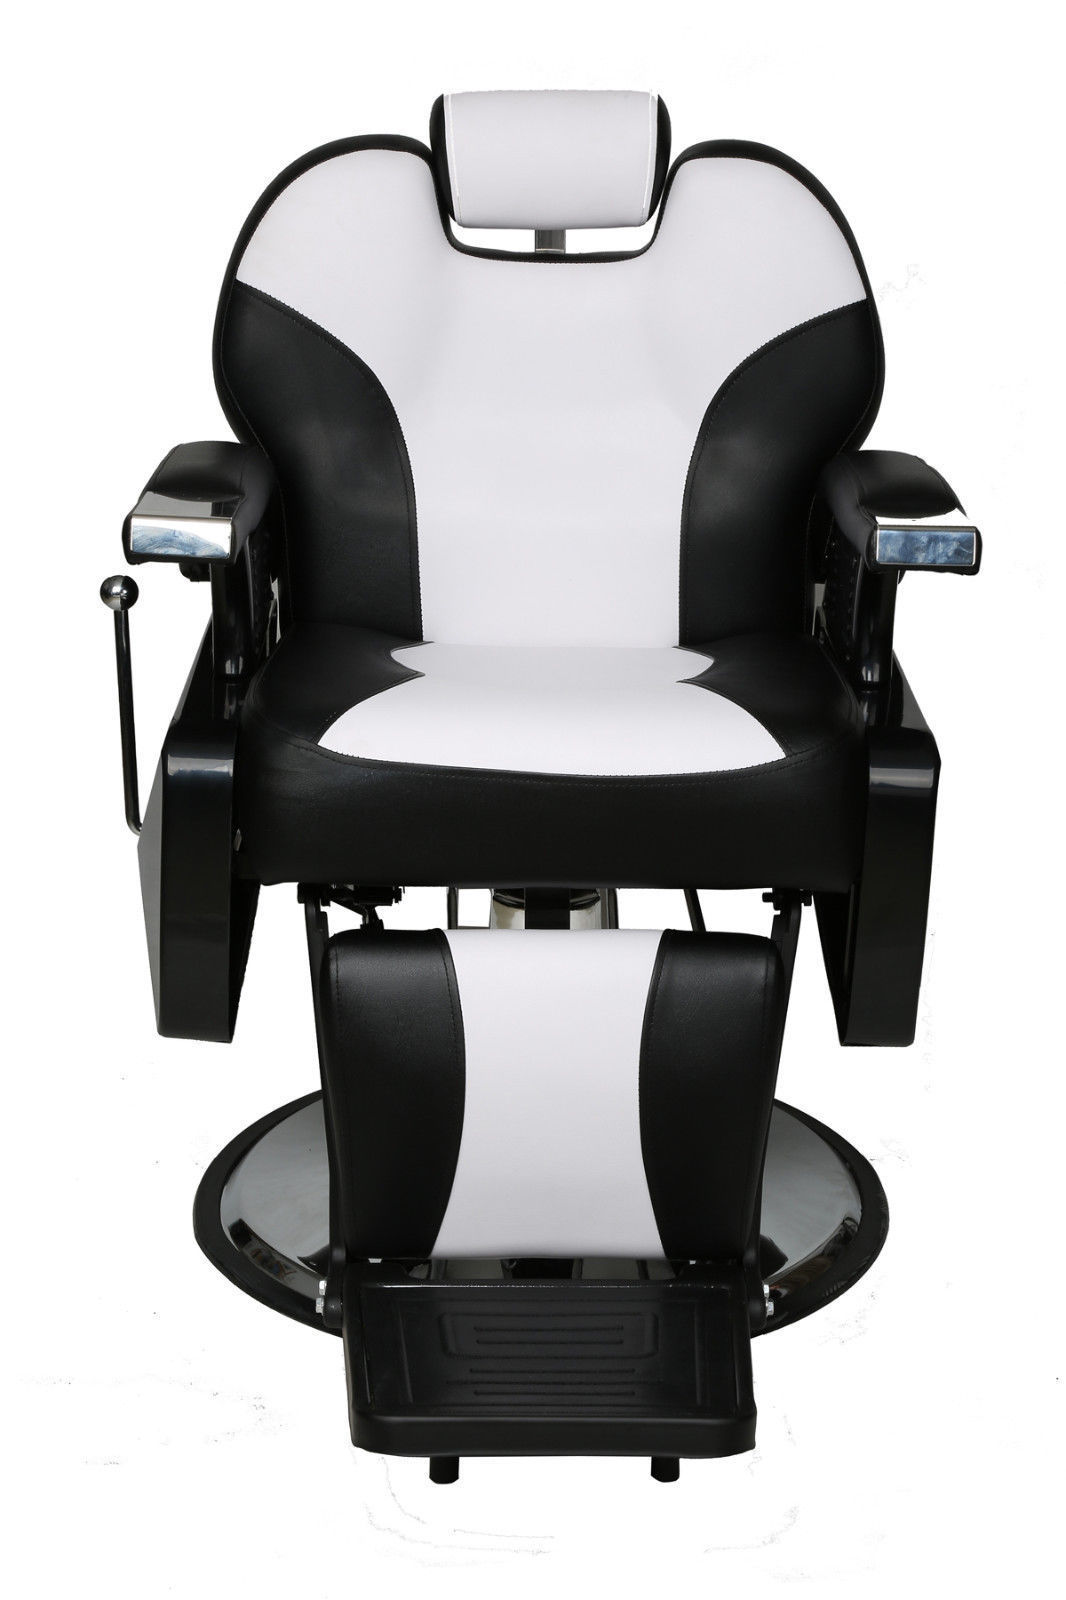 BarberPub All Purpose Hydraulic Reclining Barber Chair Salon Spa Beauty Chair Styling Equipment 6154-2687